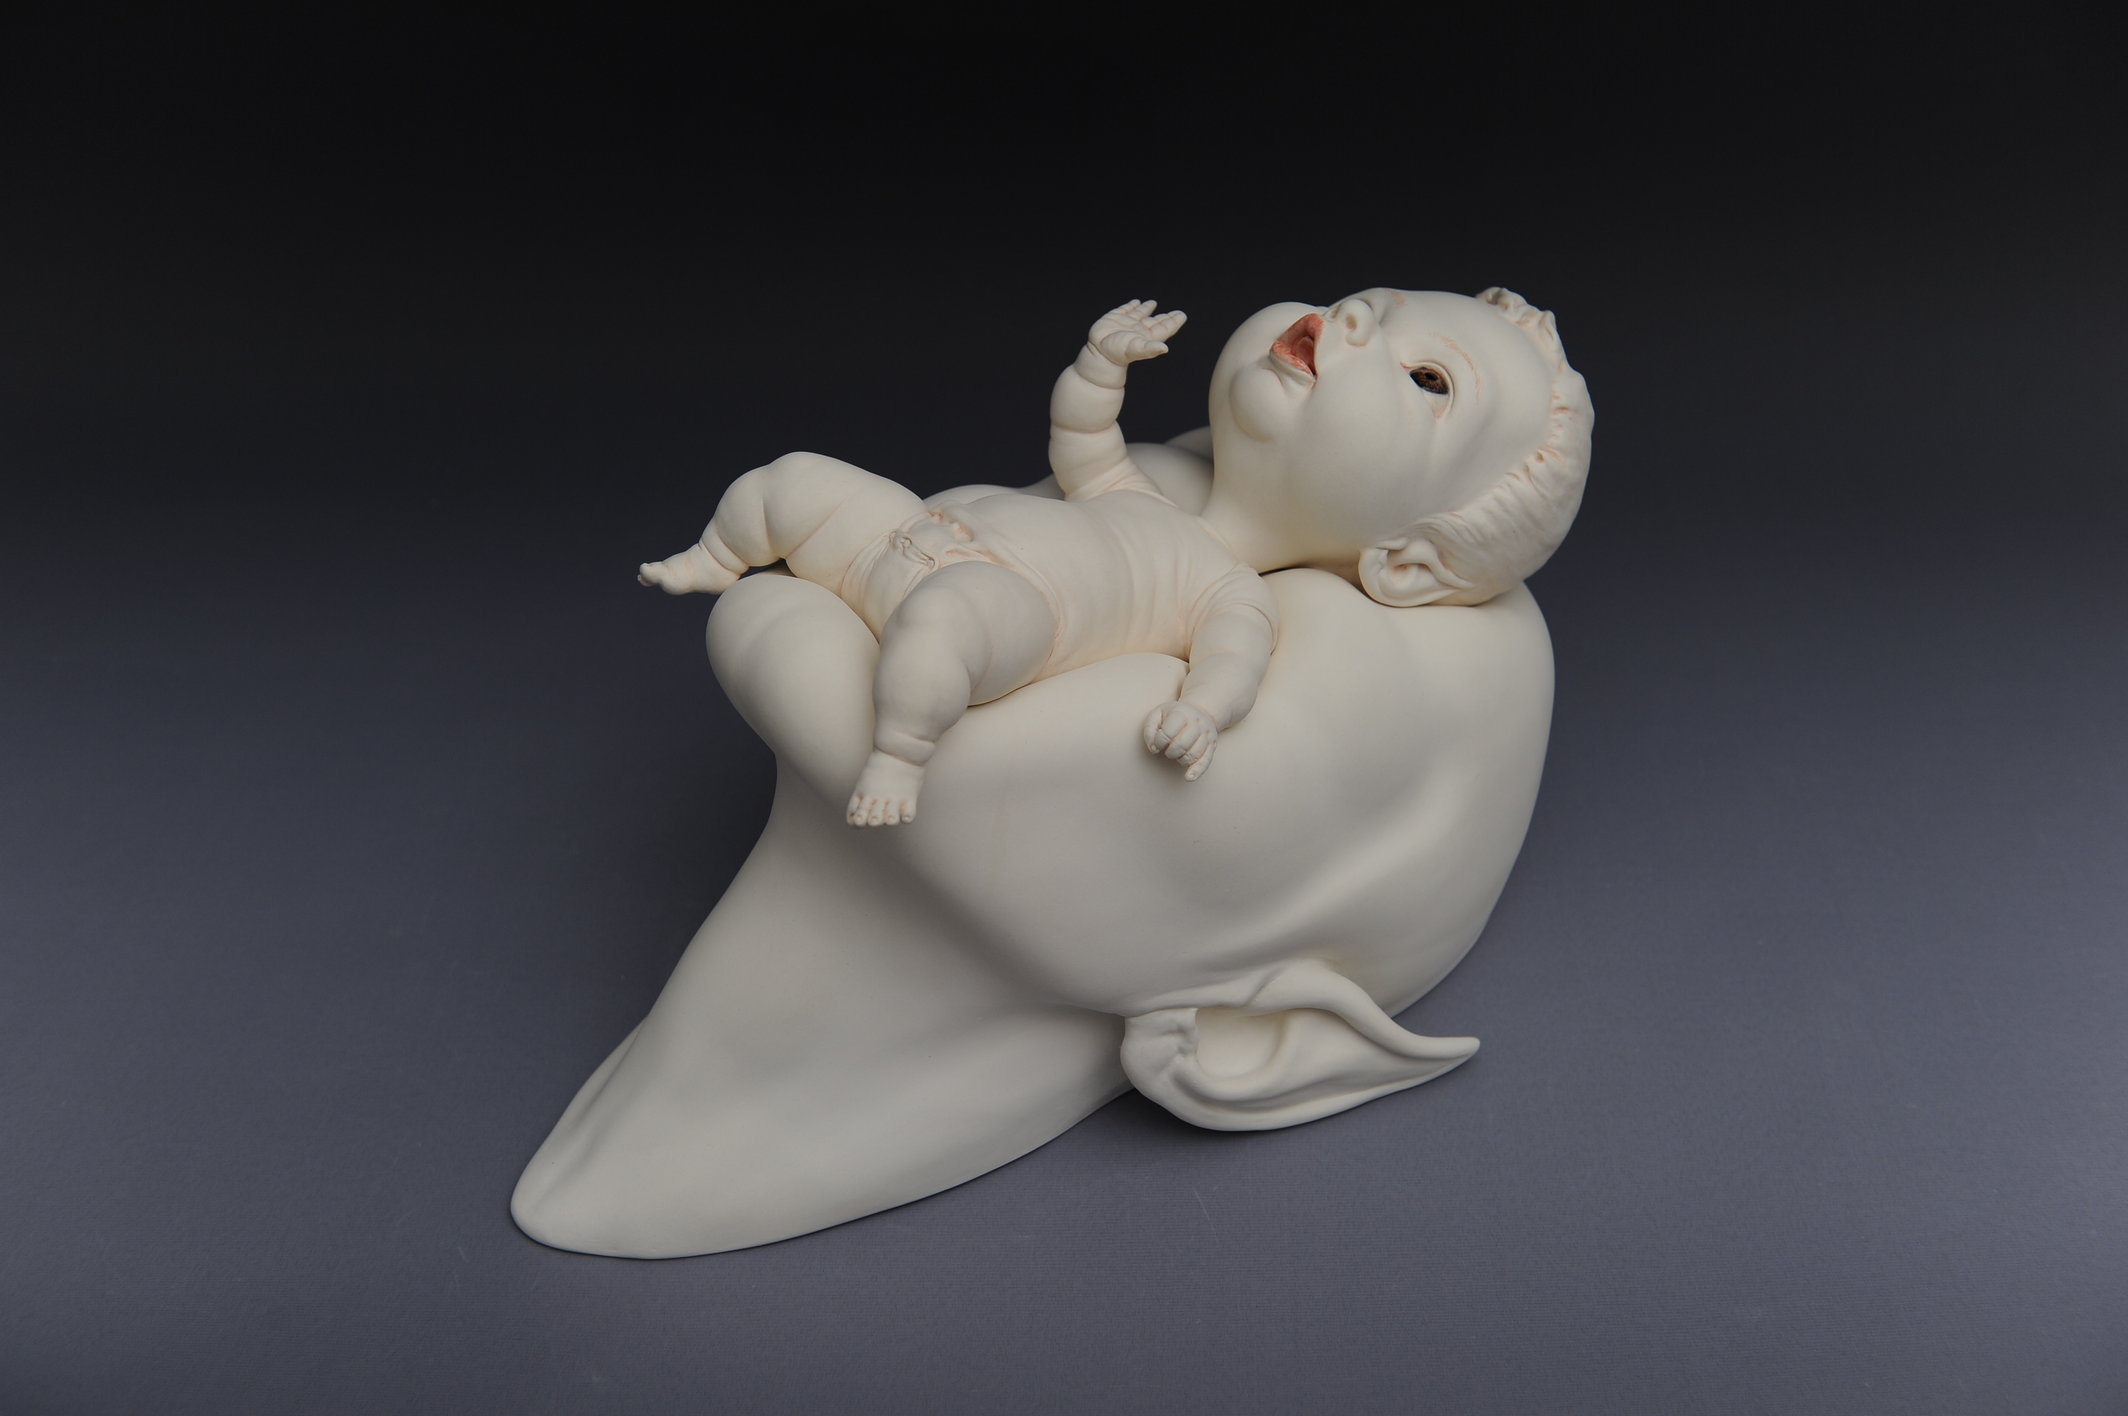 17 ceramic sculpture byjohnson tsang